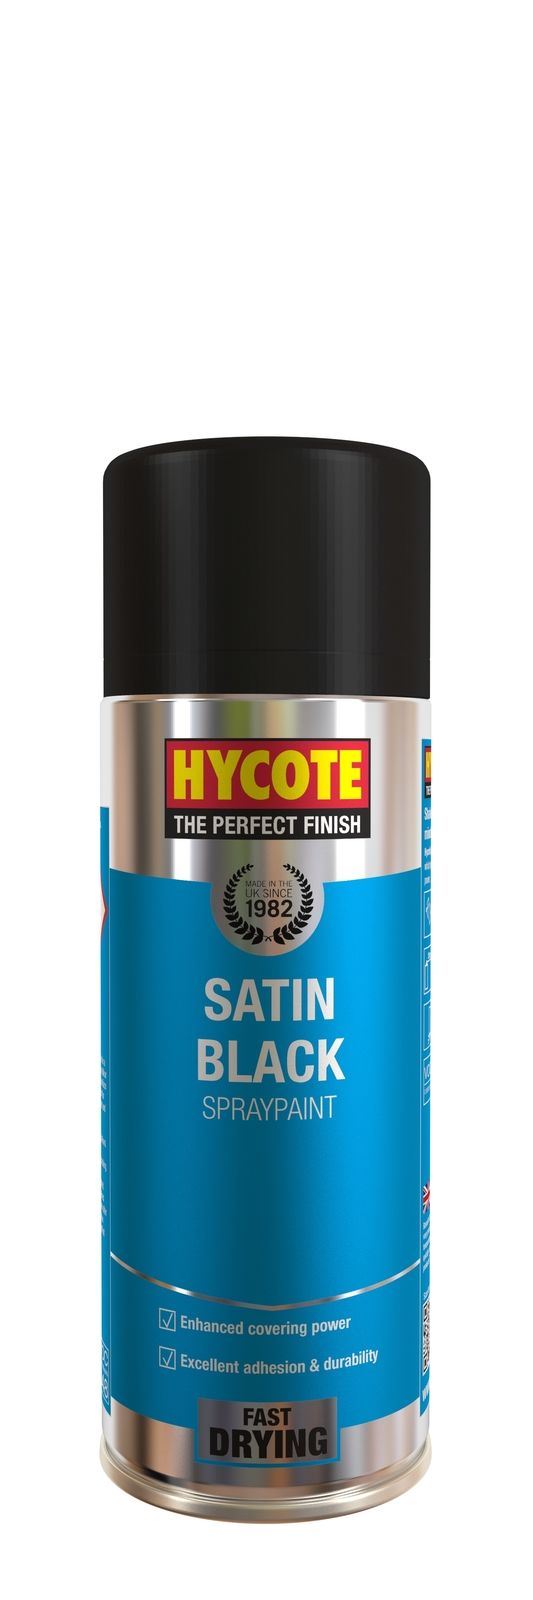 Hycote Satin Black Paint - 400ml